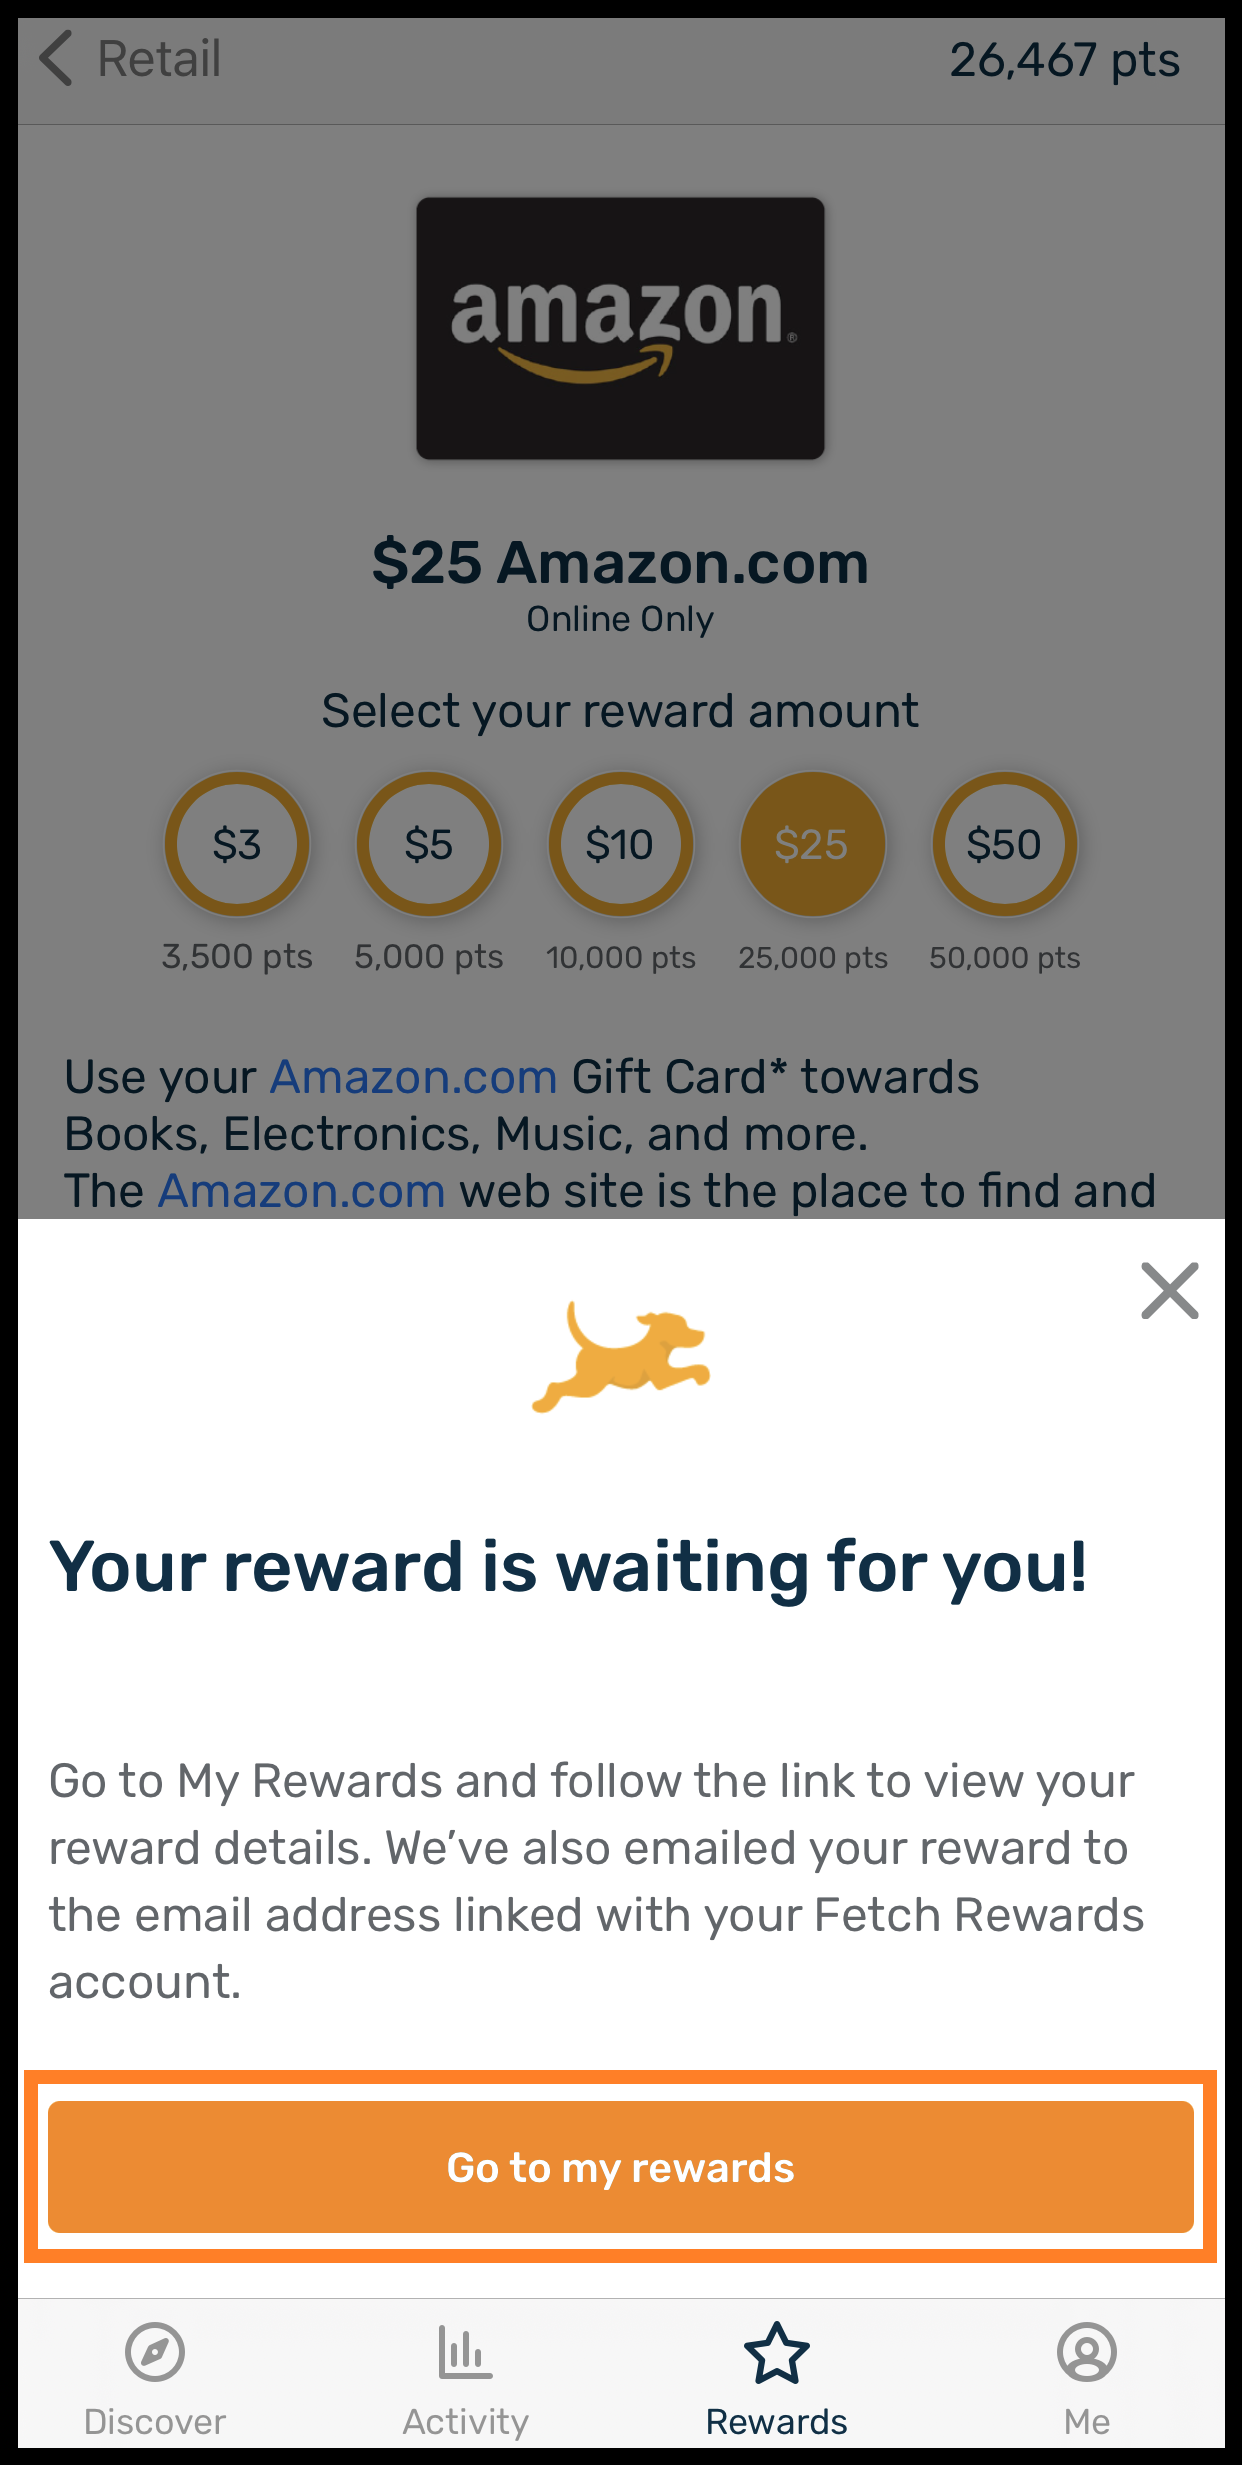 why does fetch rewards want receipts